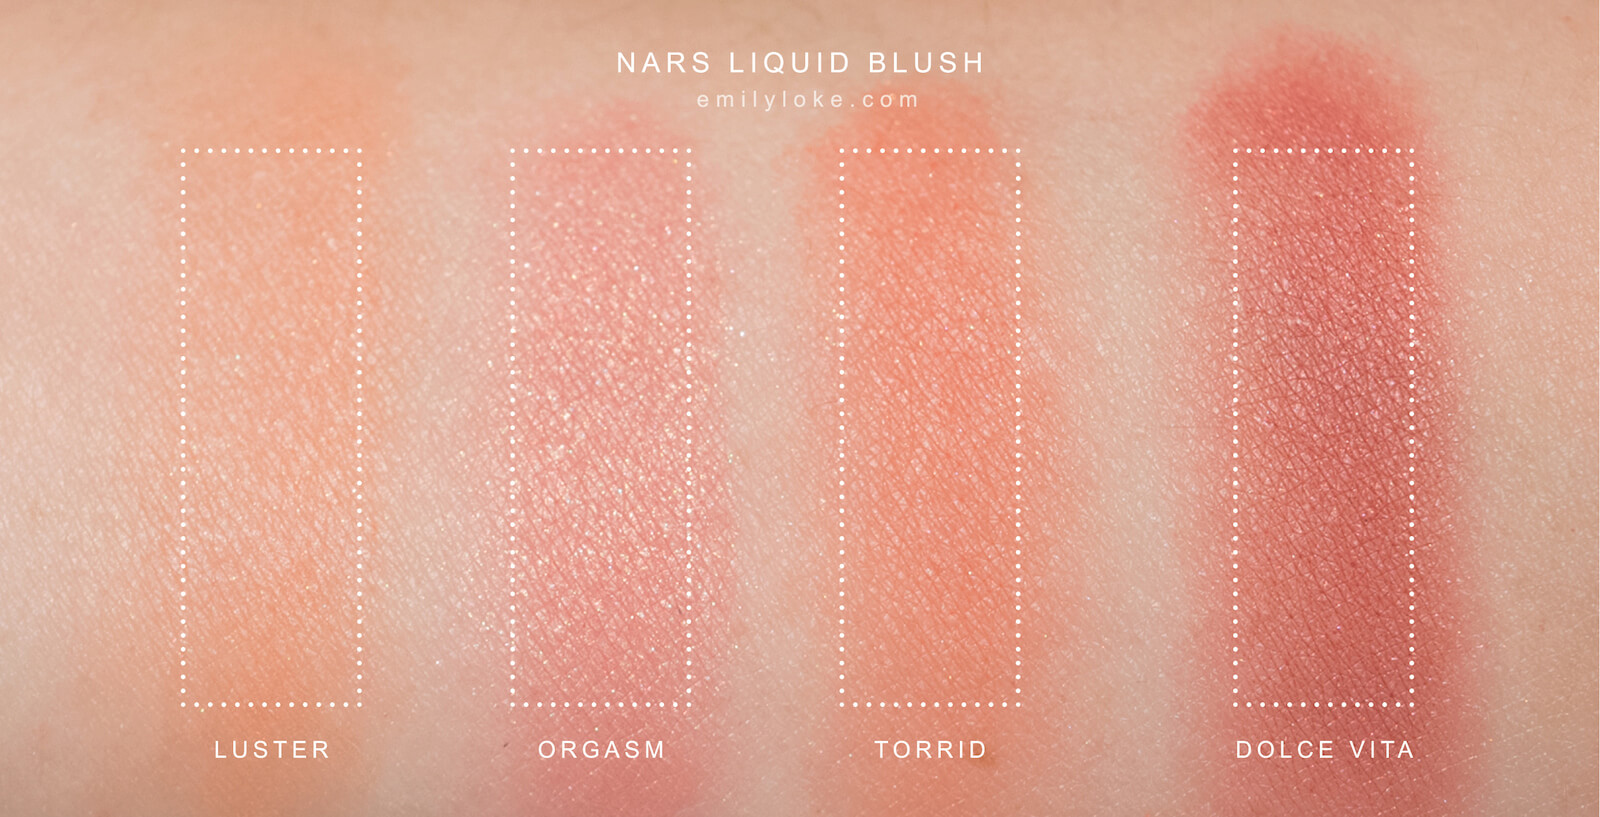 Nars Liquid Blush #Luster ,Nars,บลัชเนื้อลิควิด , Liquid Blush , Liquid Blush ราคา, Liquid Blush ใช้ดีไหม, Liquid Blush ซื้อได้ที่